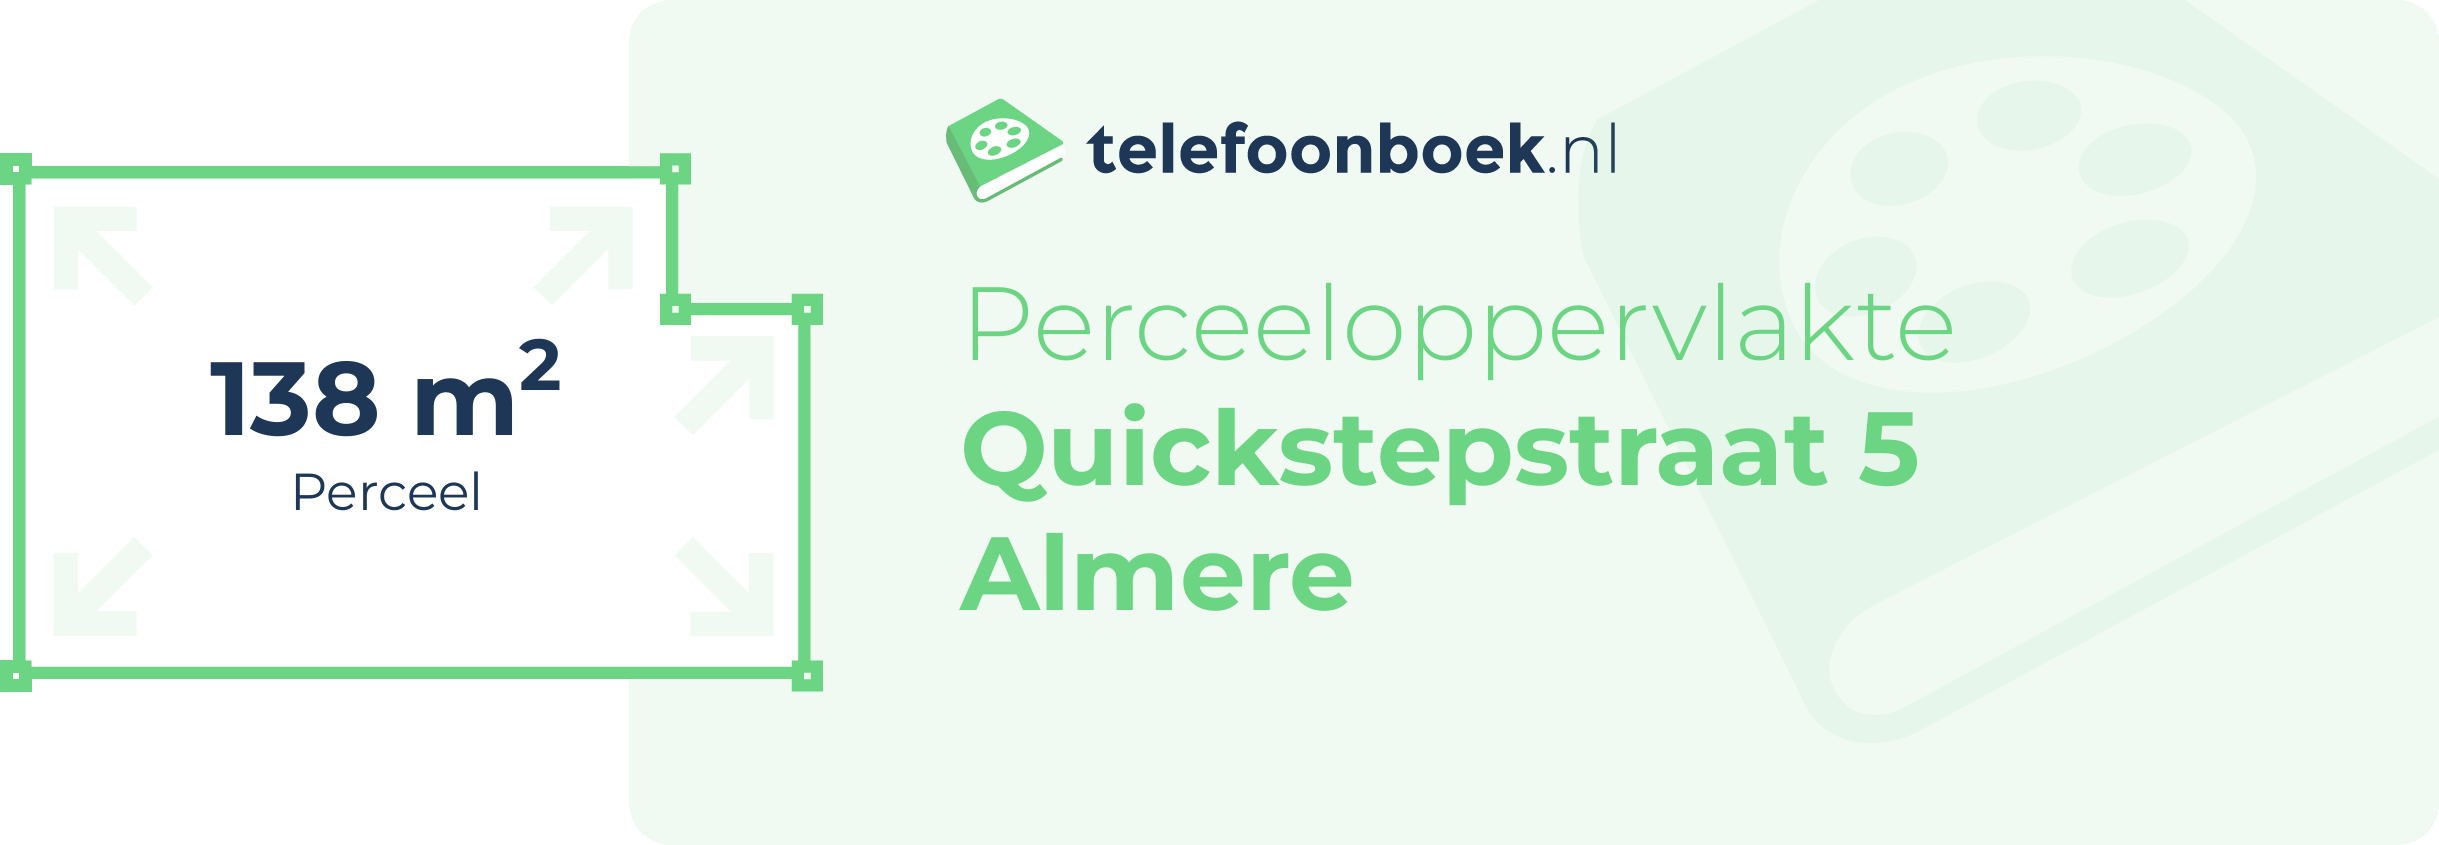 Perceeloppervlakte Quickstepstraat 5 Almere